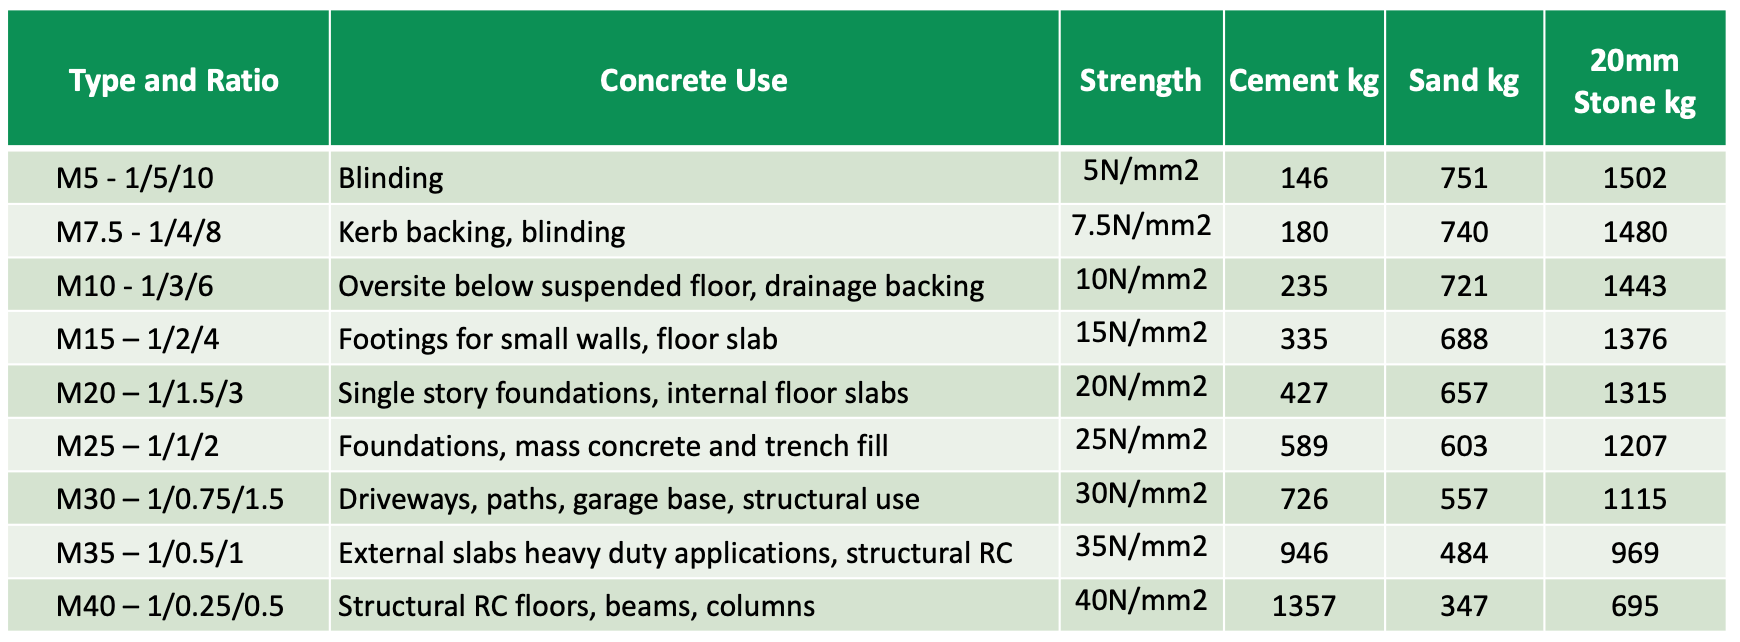 Concrete Calculator - Concrete Cost Calculator - Concrete Mix Calculator